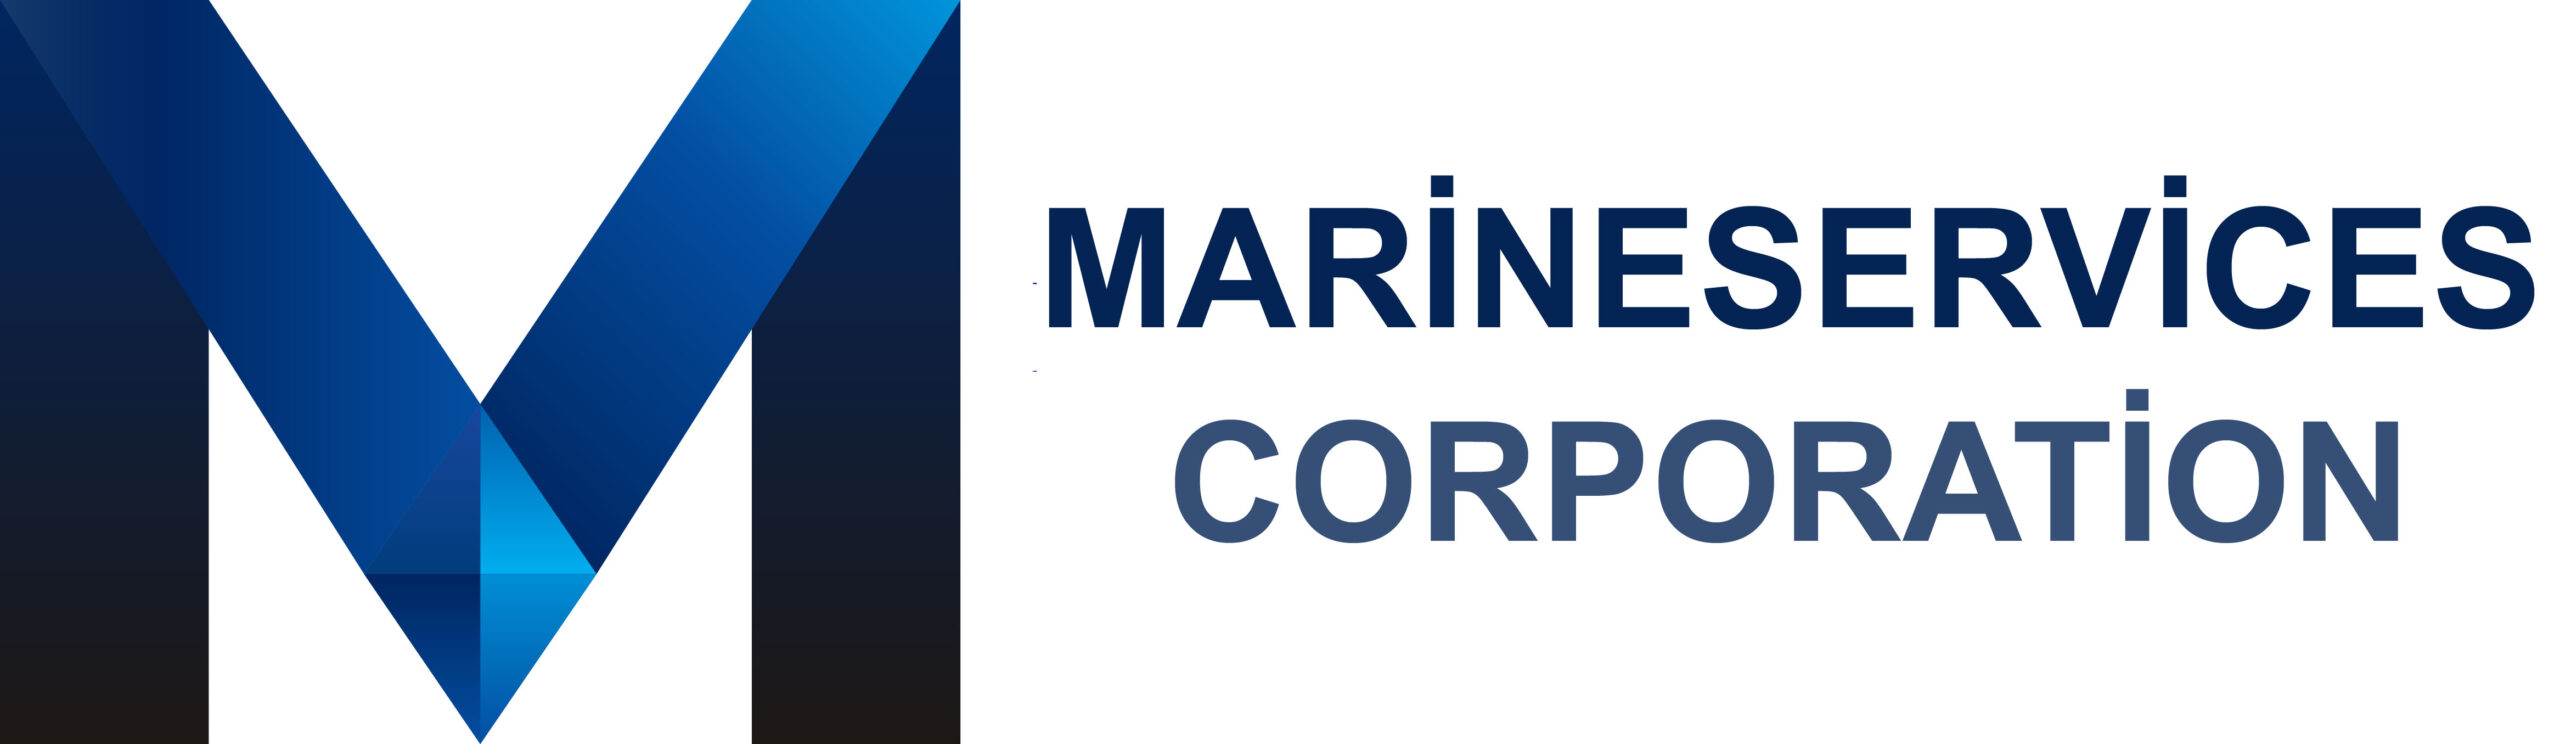 Marine Services Corporation